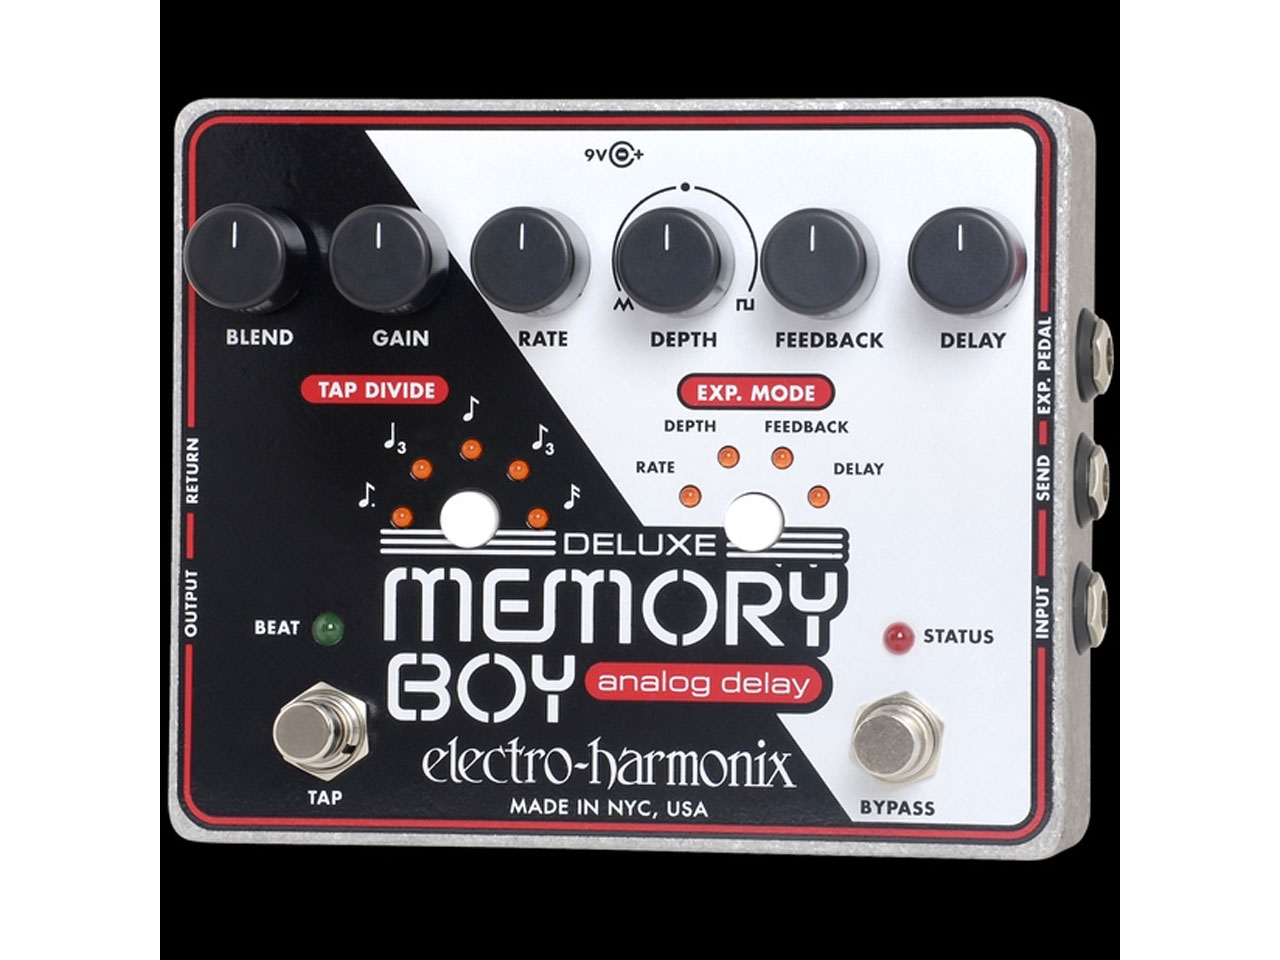 electro-harmonix MEMORY BOY